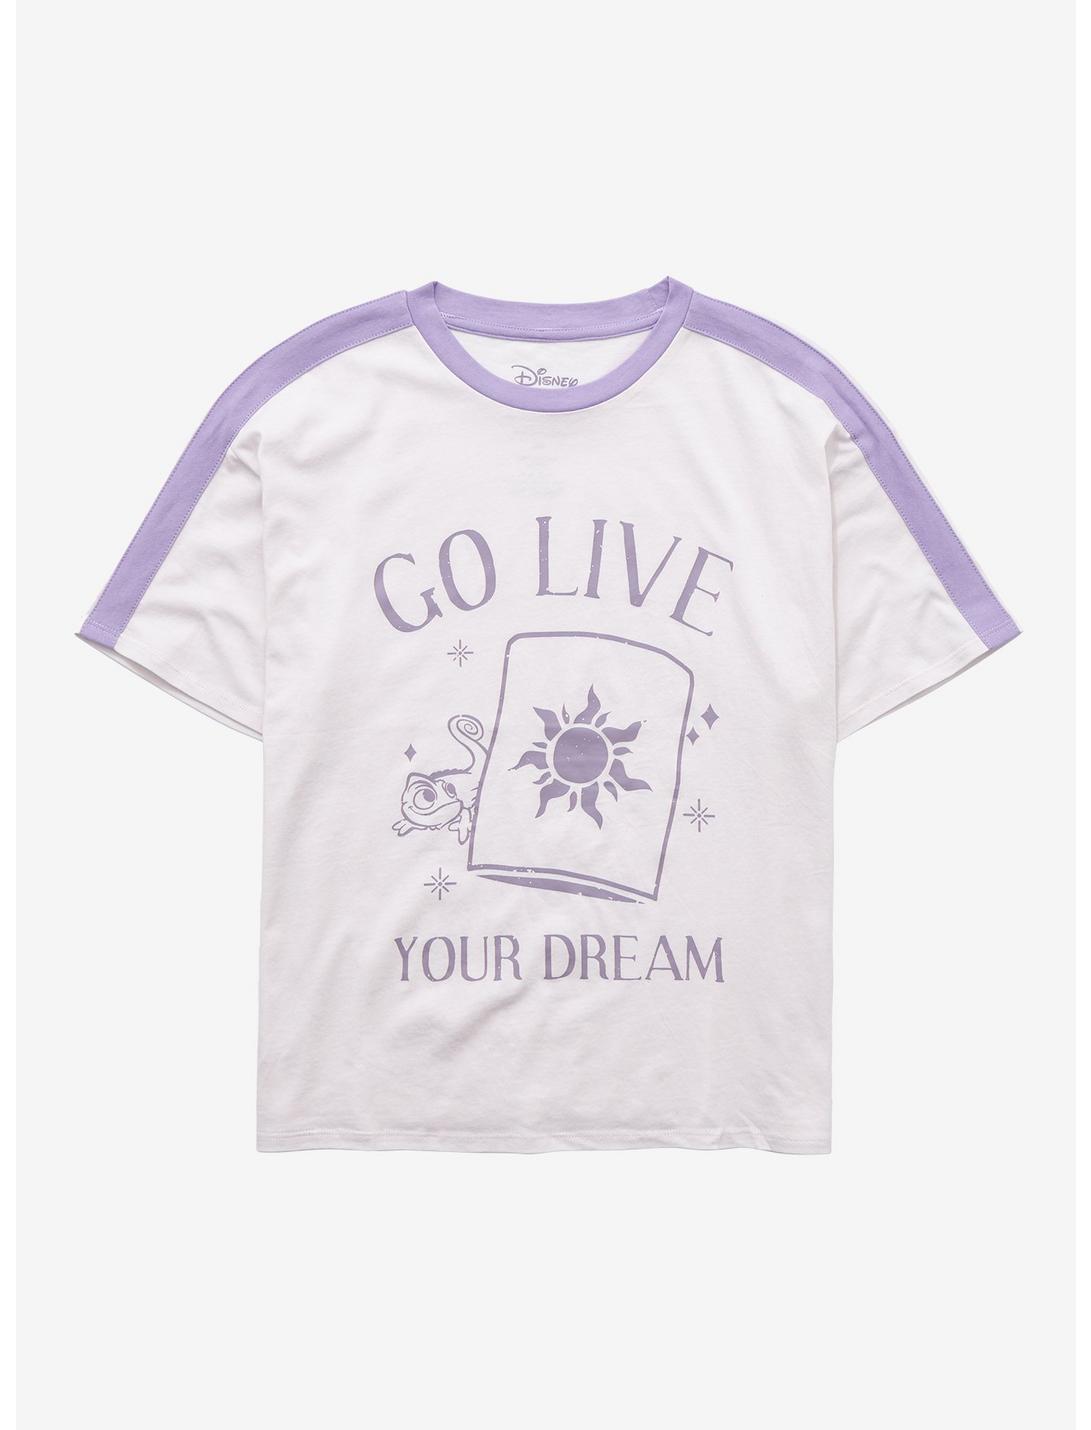 Disney Tangled Live Your Dream Taping Girls T-Shirt, PURPLE, hi-res